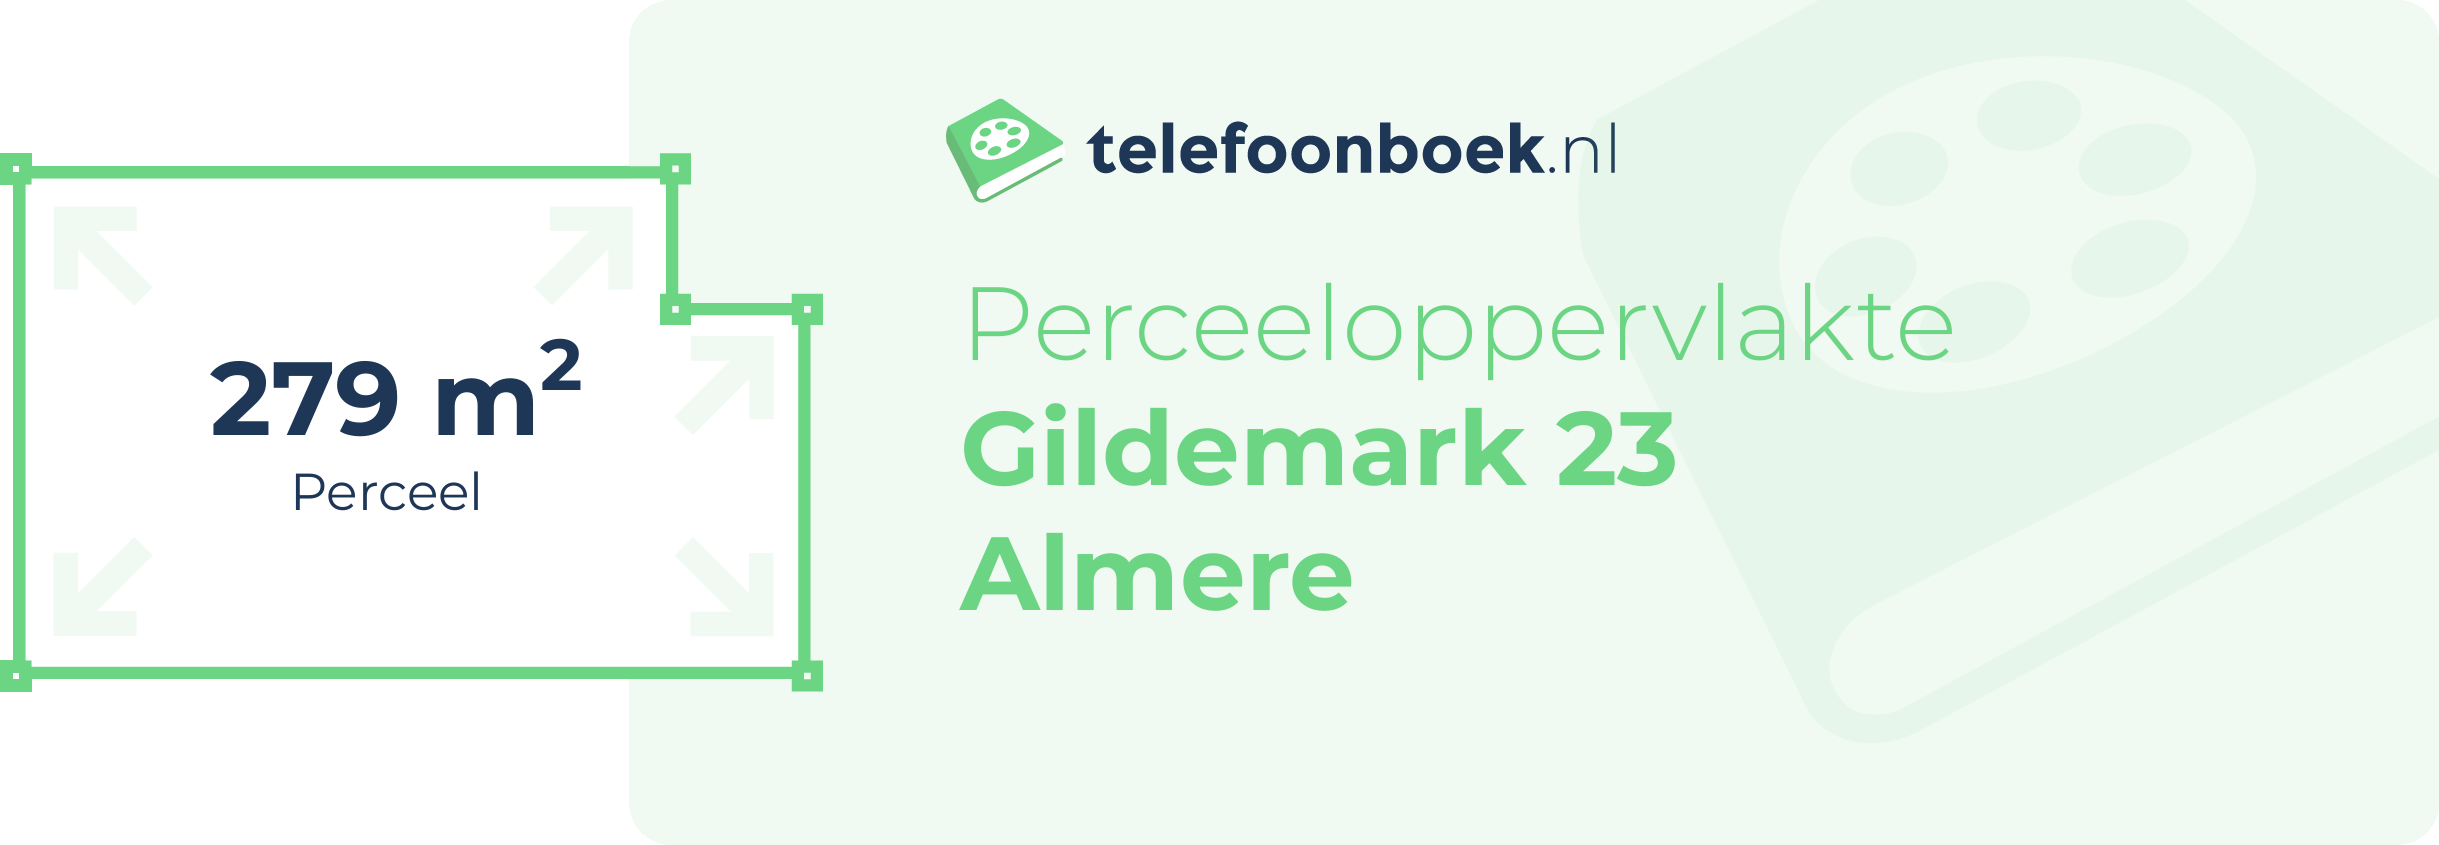 Perceeloppervlakte Gildemark 23 Almere